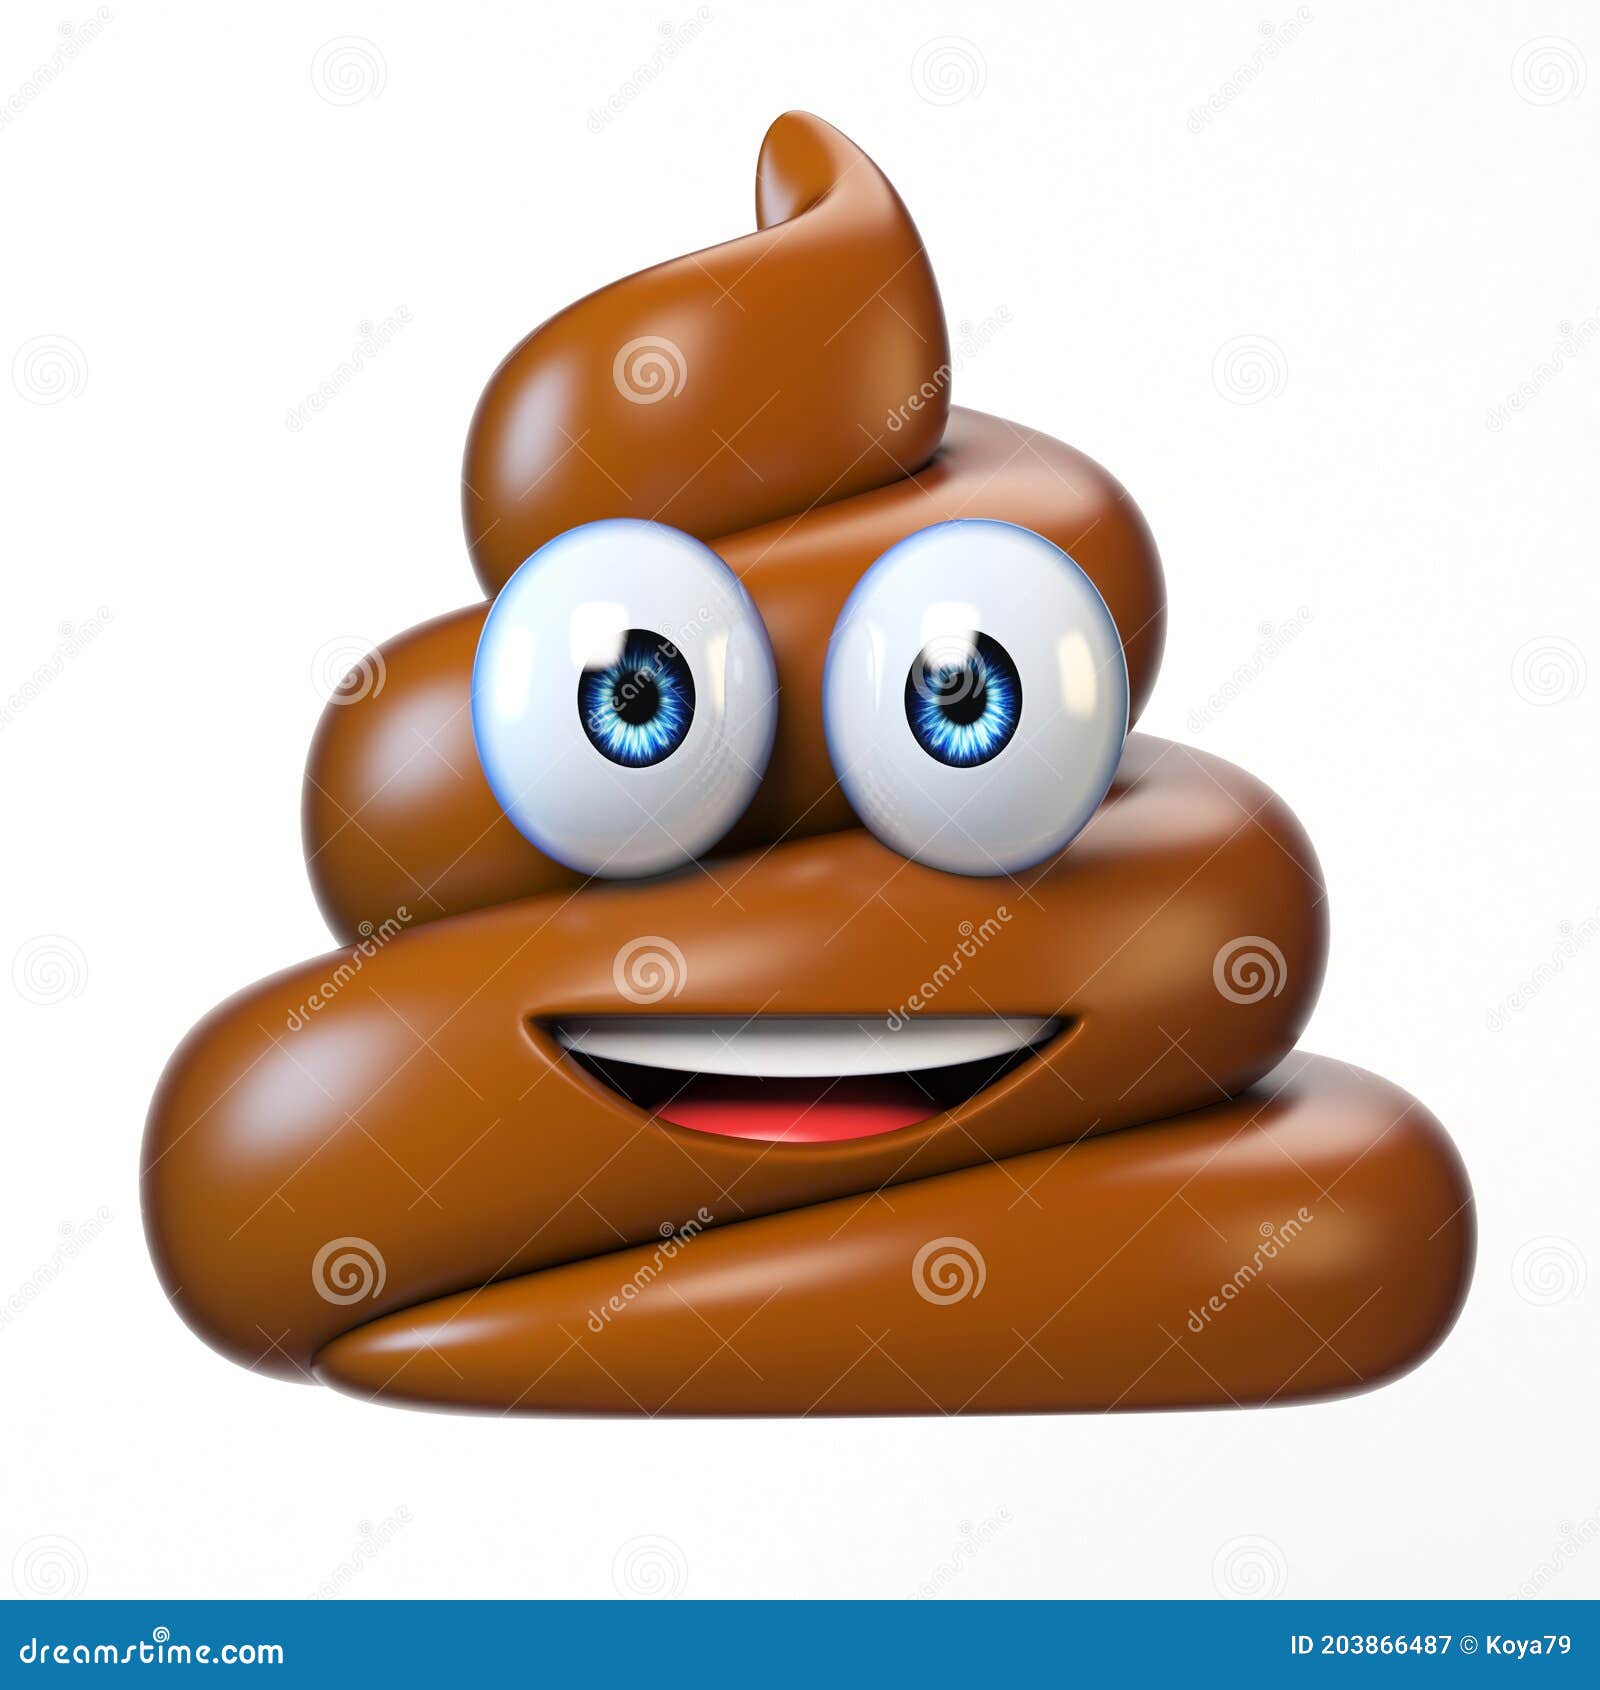 poop emoji  on white background, poo emoticon 3d rendering